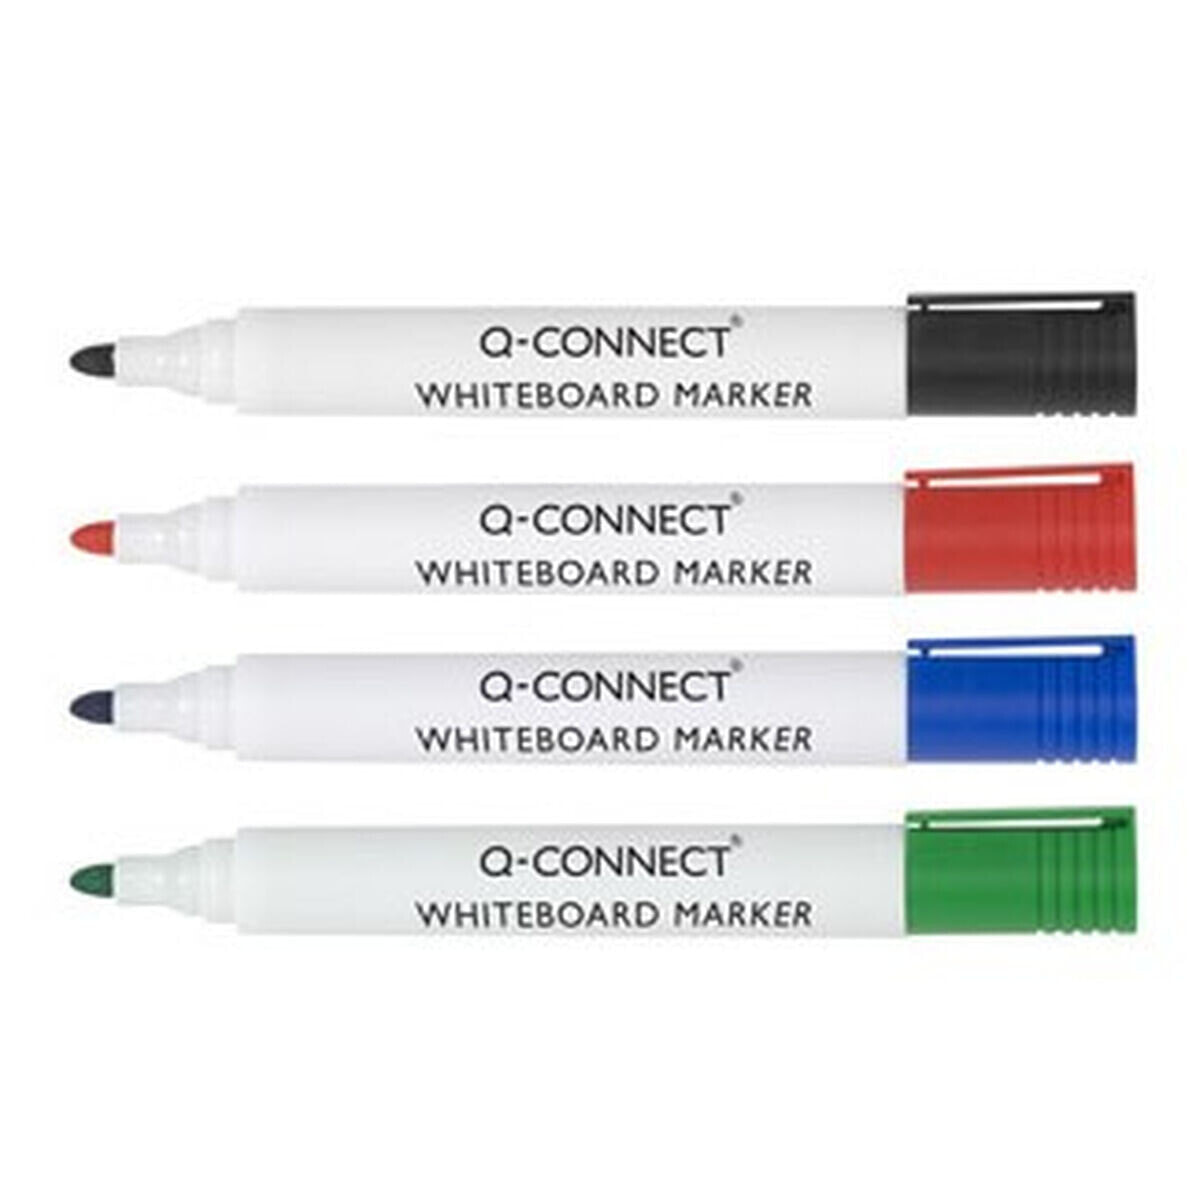 Whiteboard marker Q-Connect KF26038 White Multicolour (4 Units)